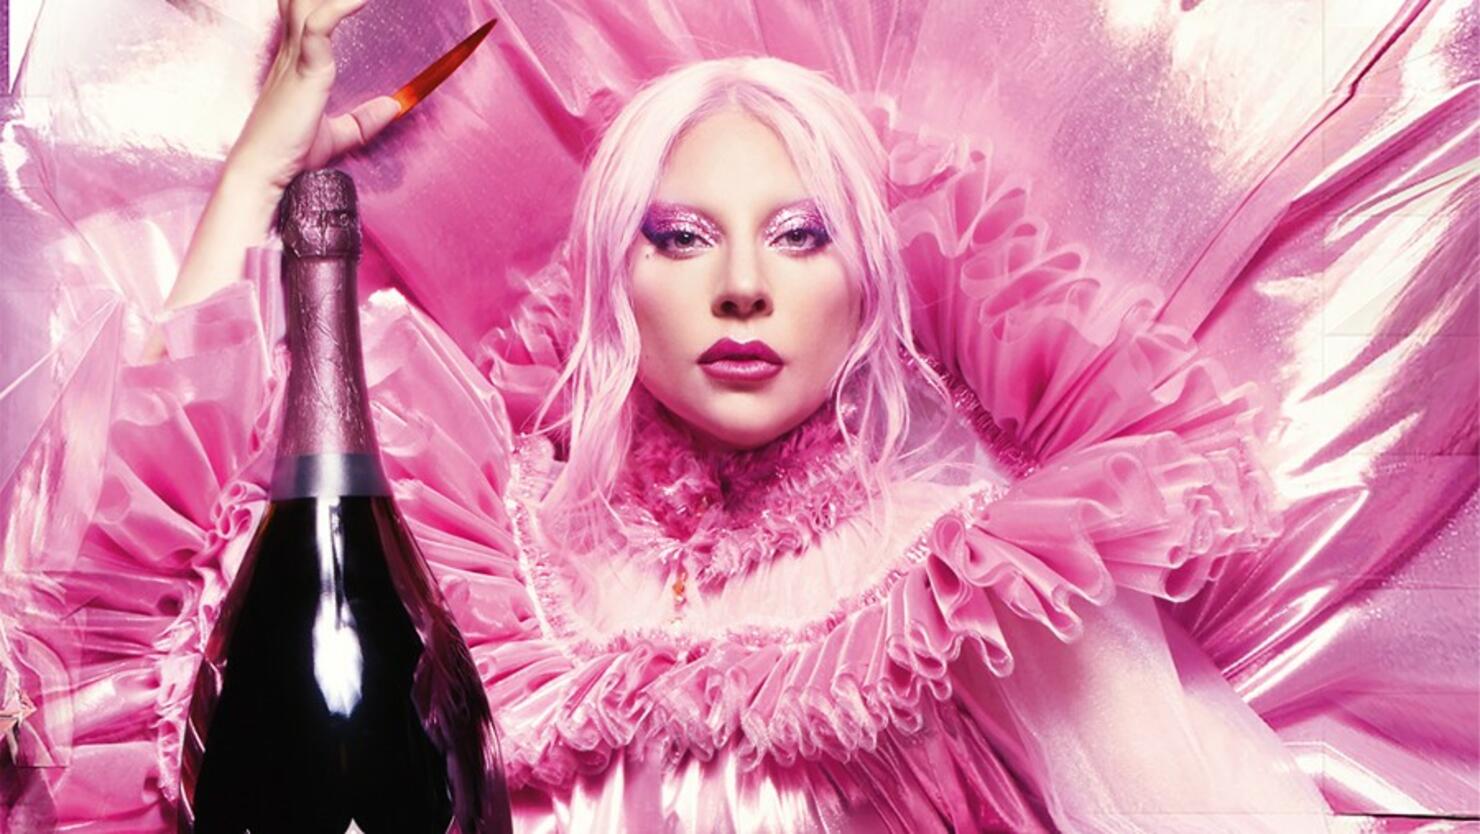 Dom Pérignon Rosé 2006 Lady Gaga Limited Edition | by Reserve Bar